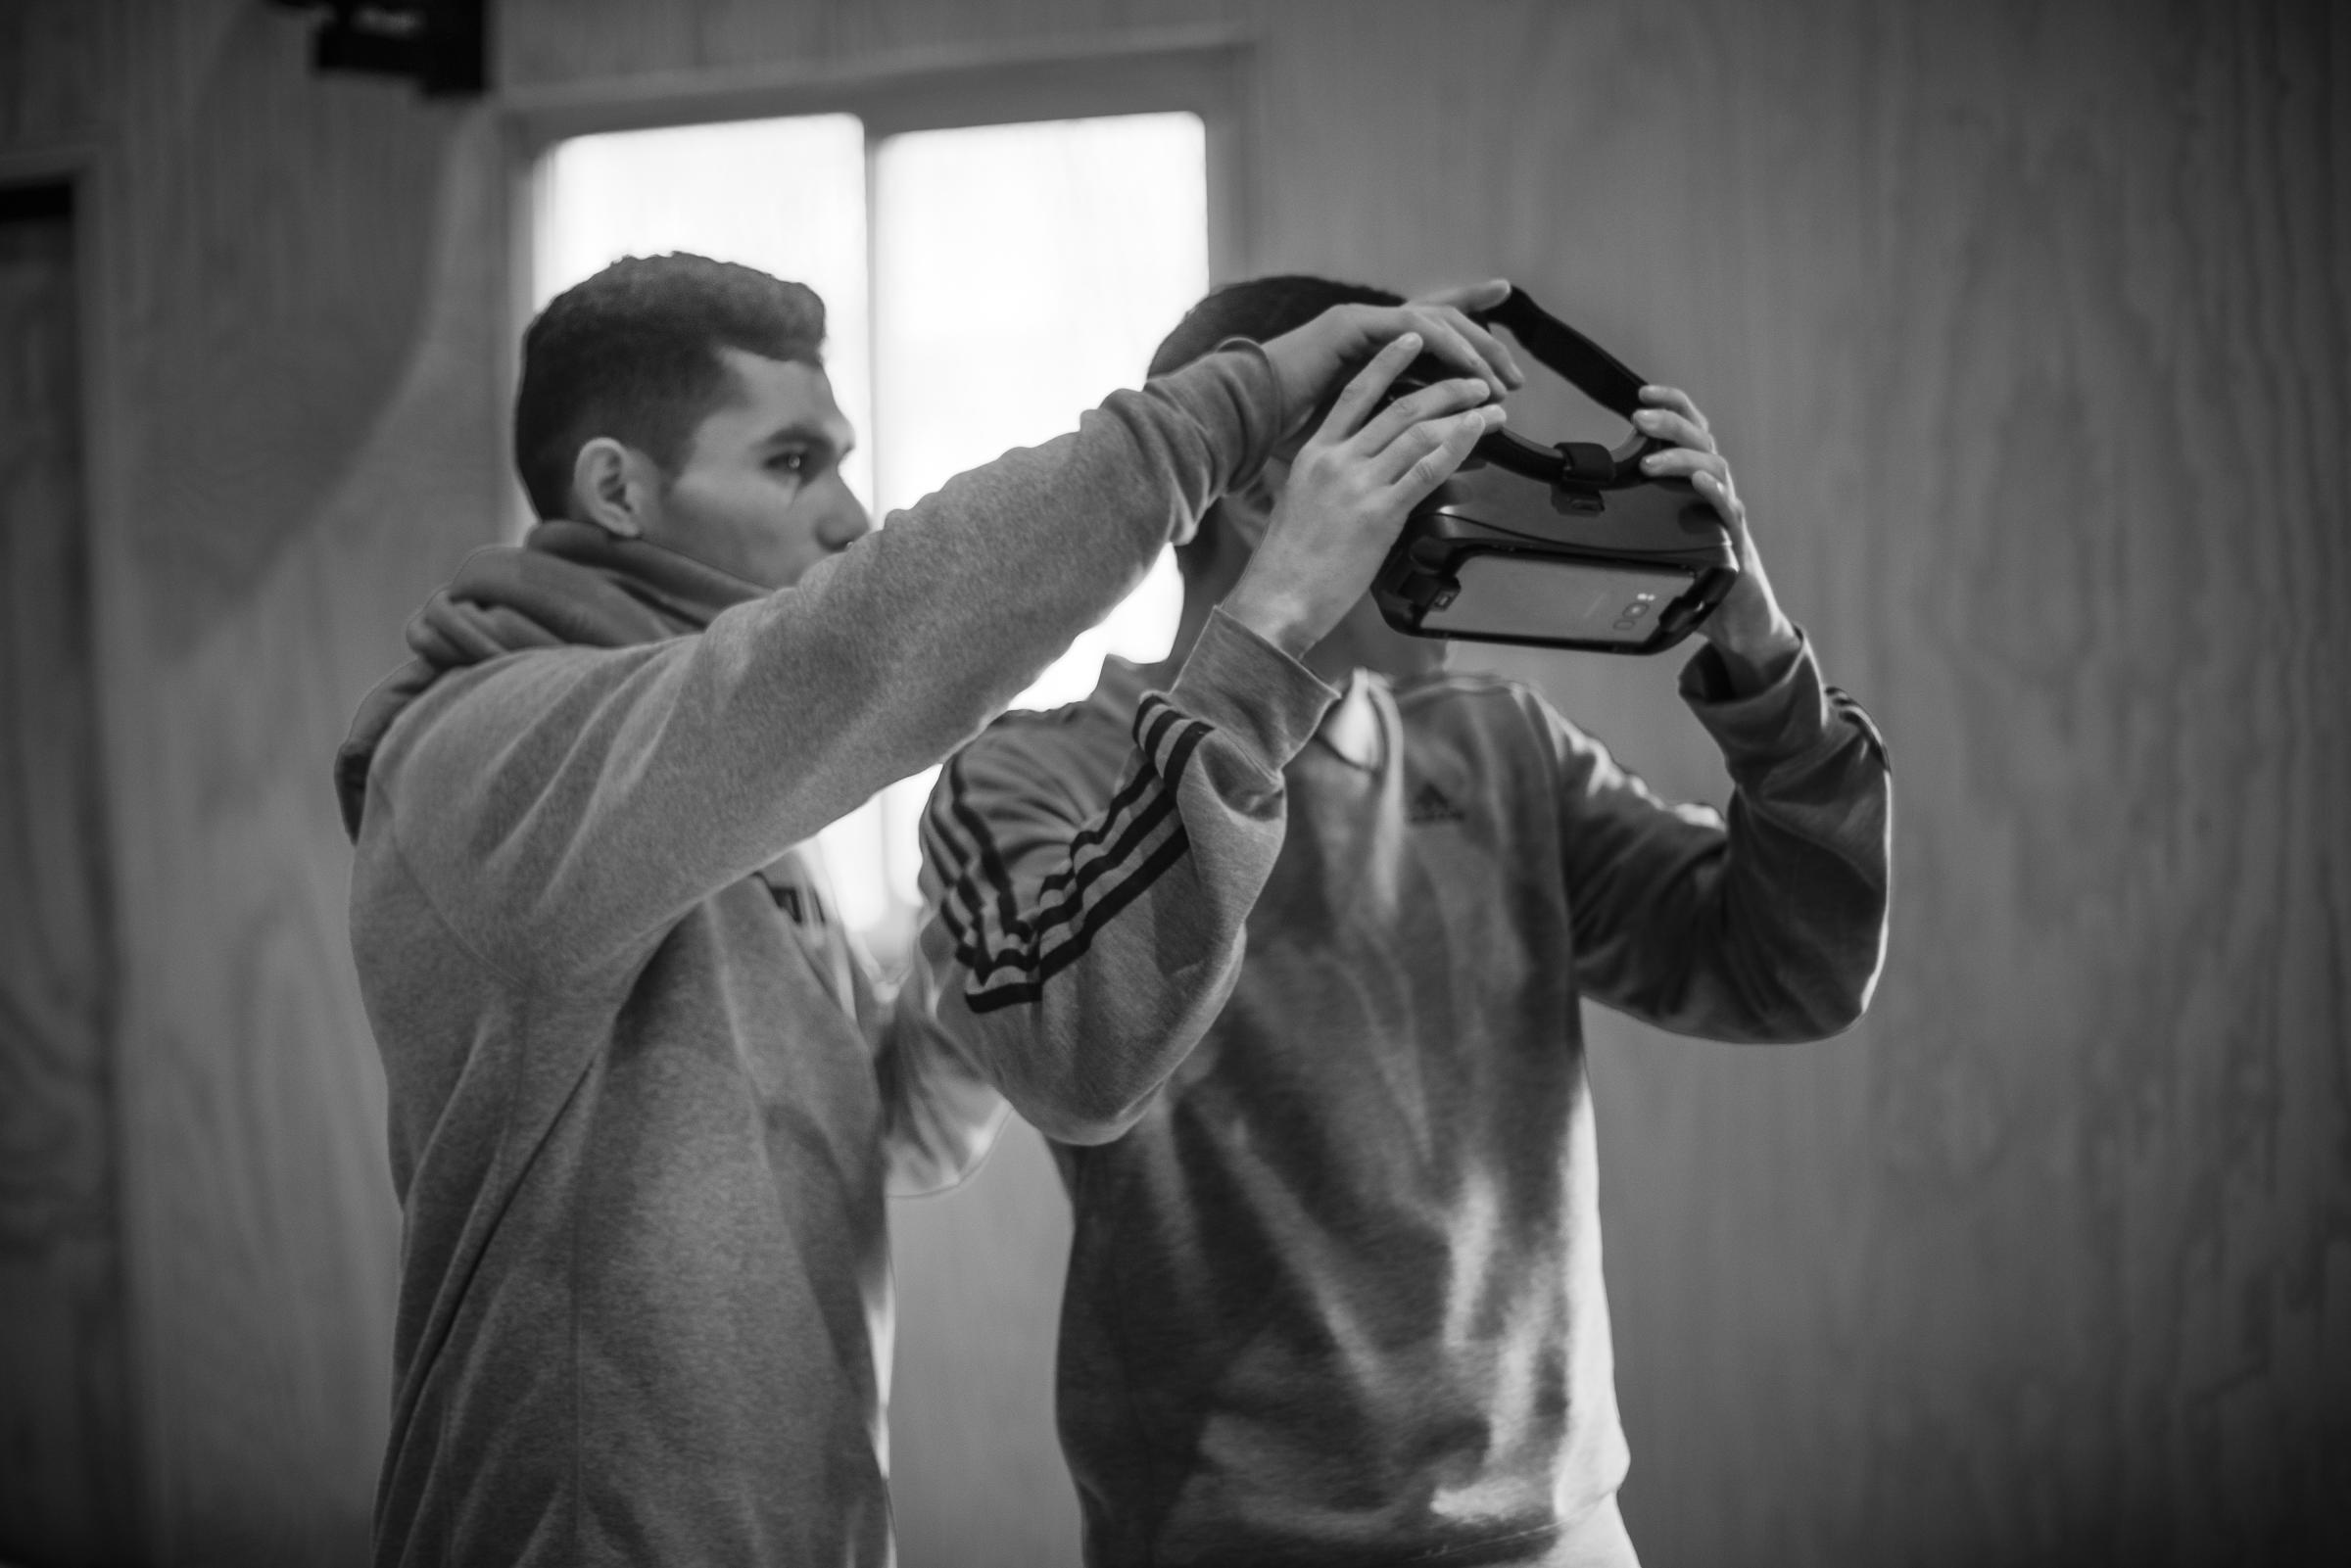 Grid Nº5/Reja Nº5 - Franco helps his partner put on the VR Headset.